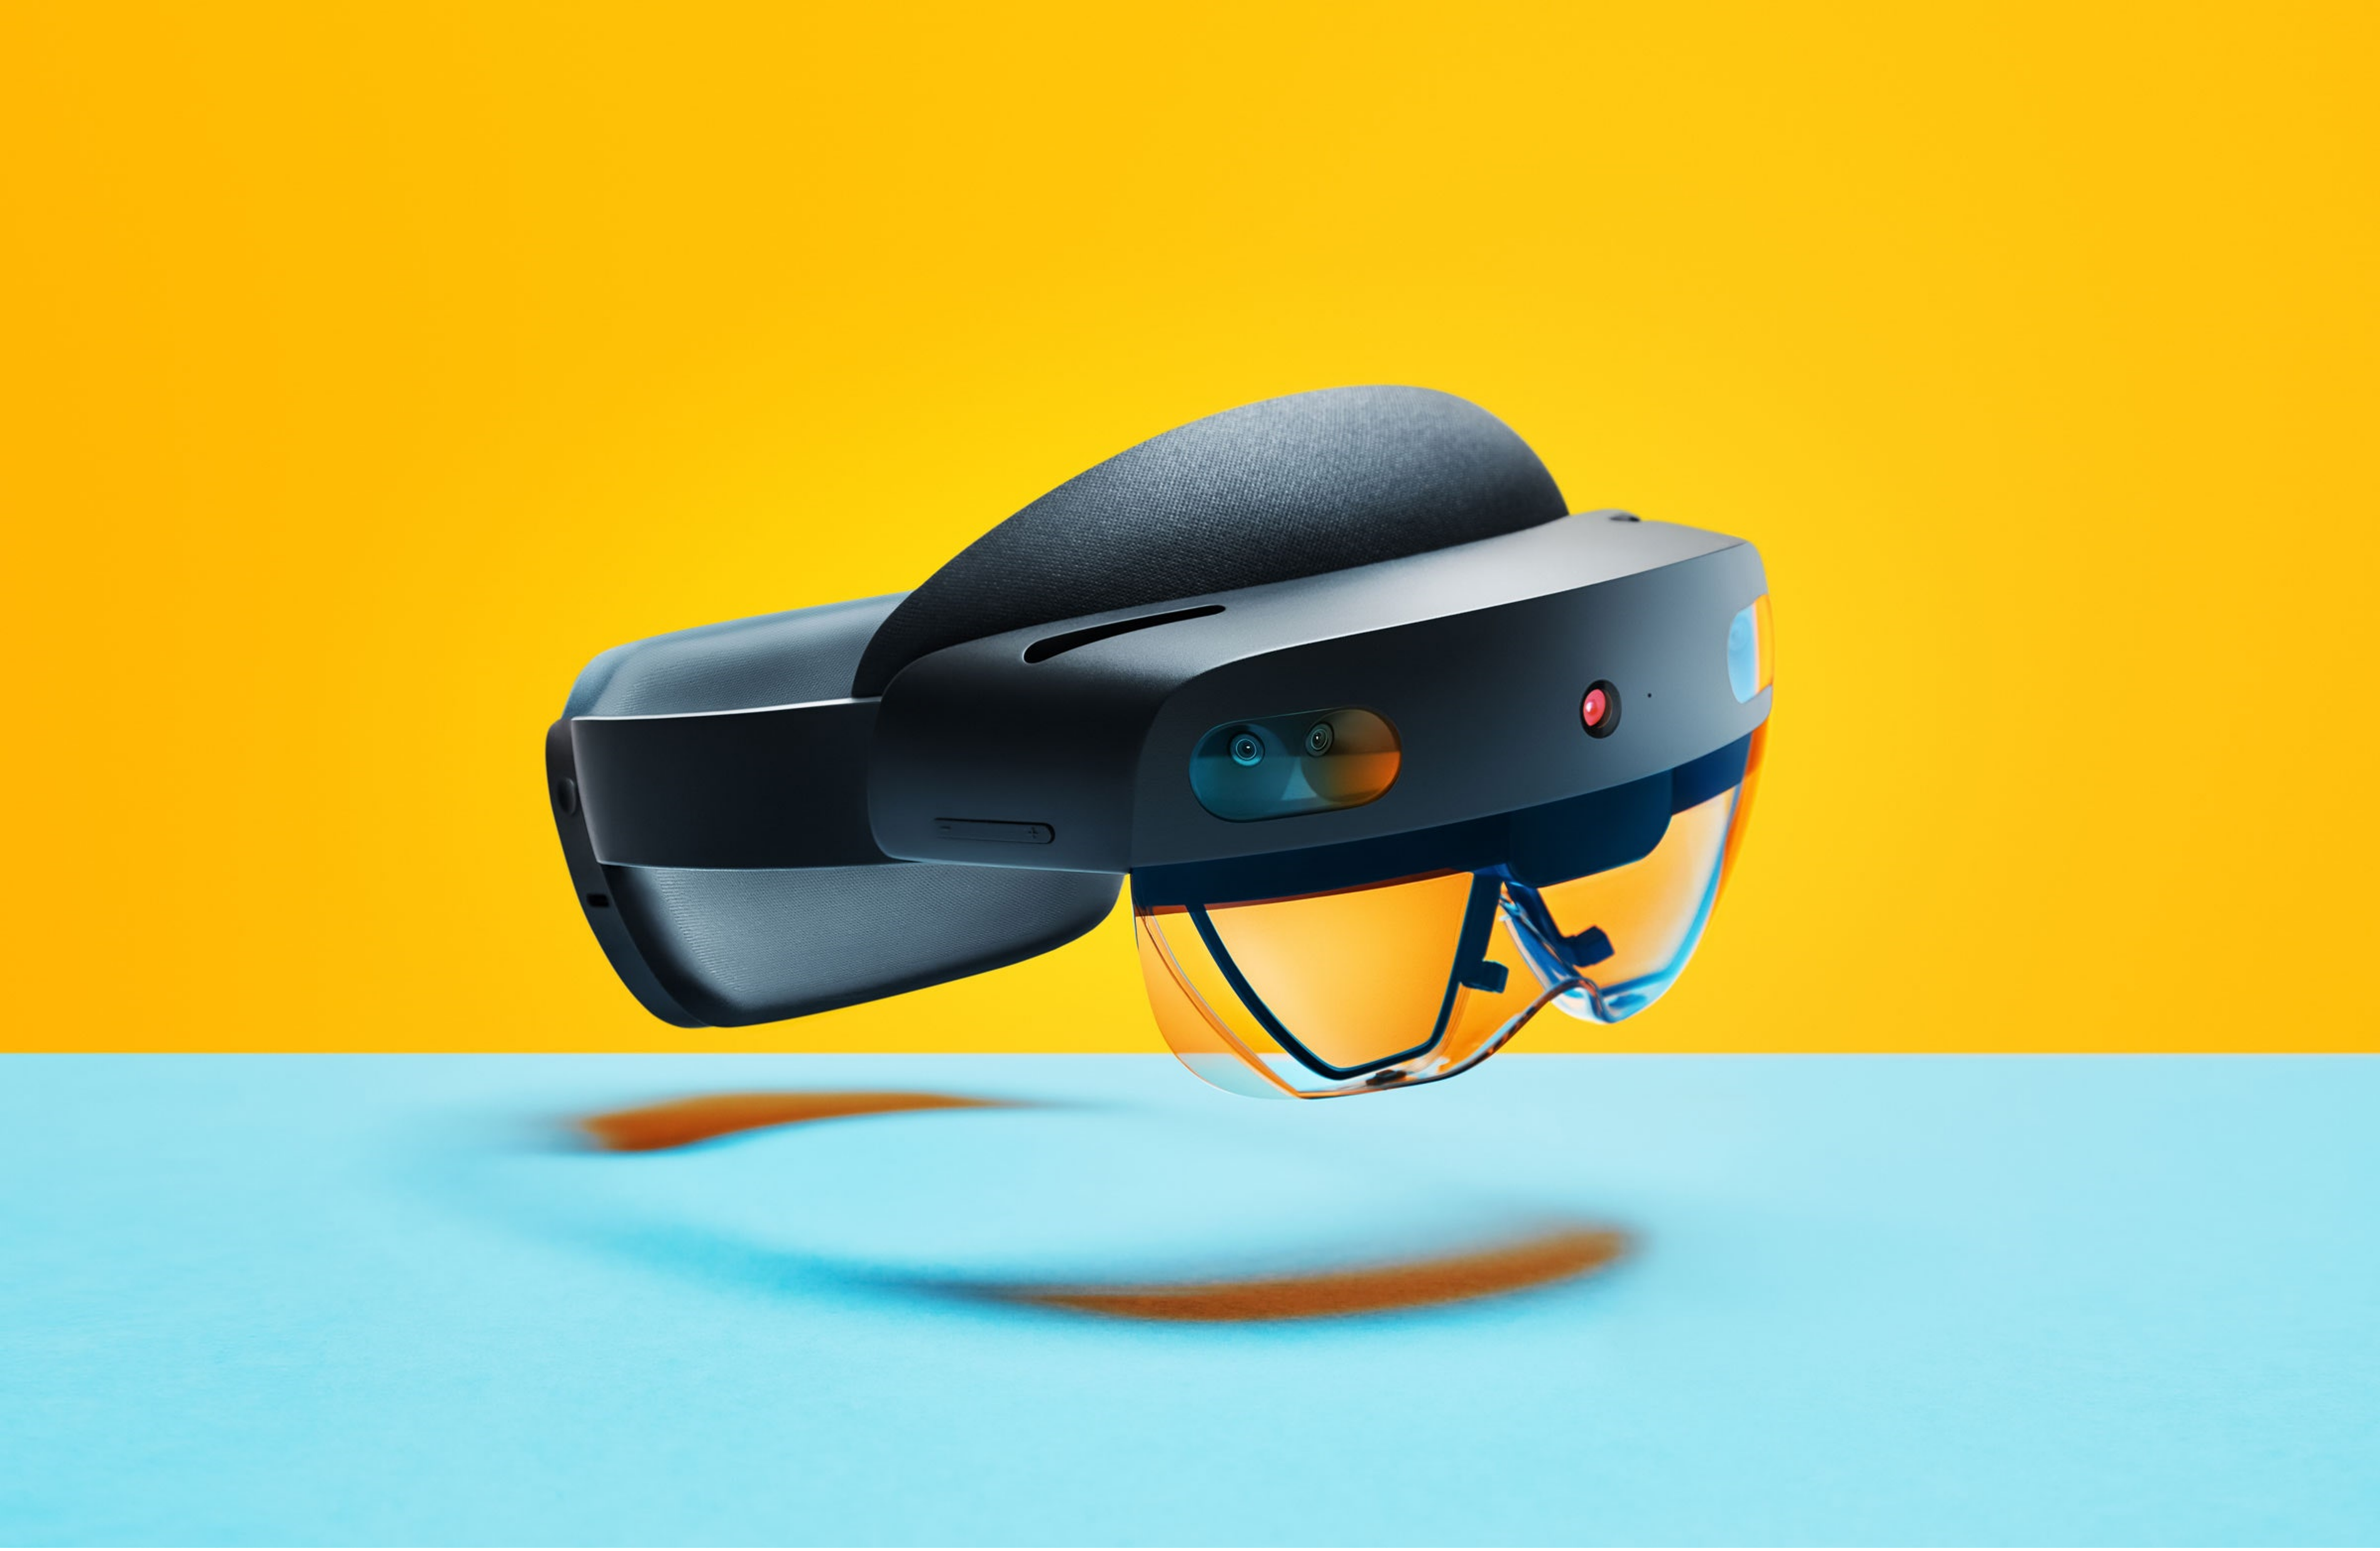 The HoloLens 2 headset